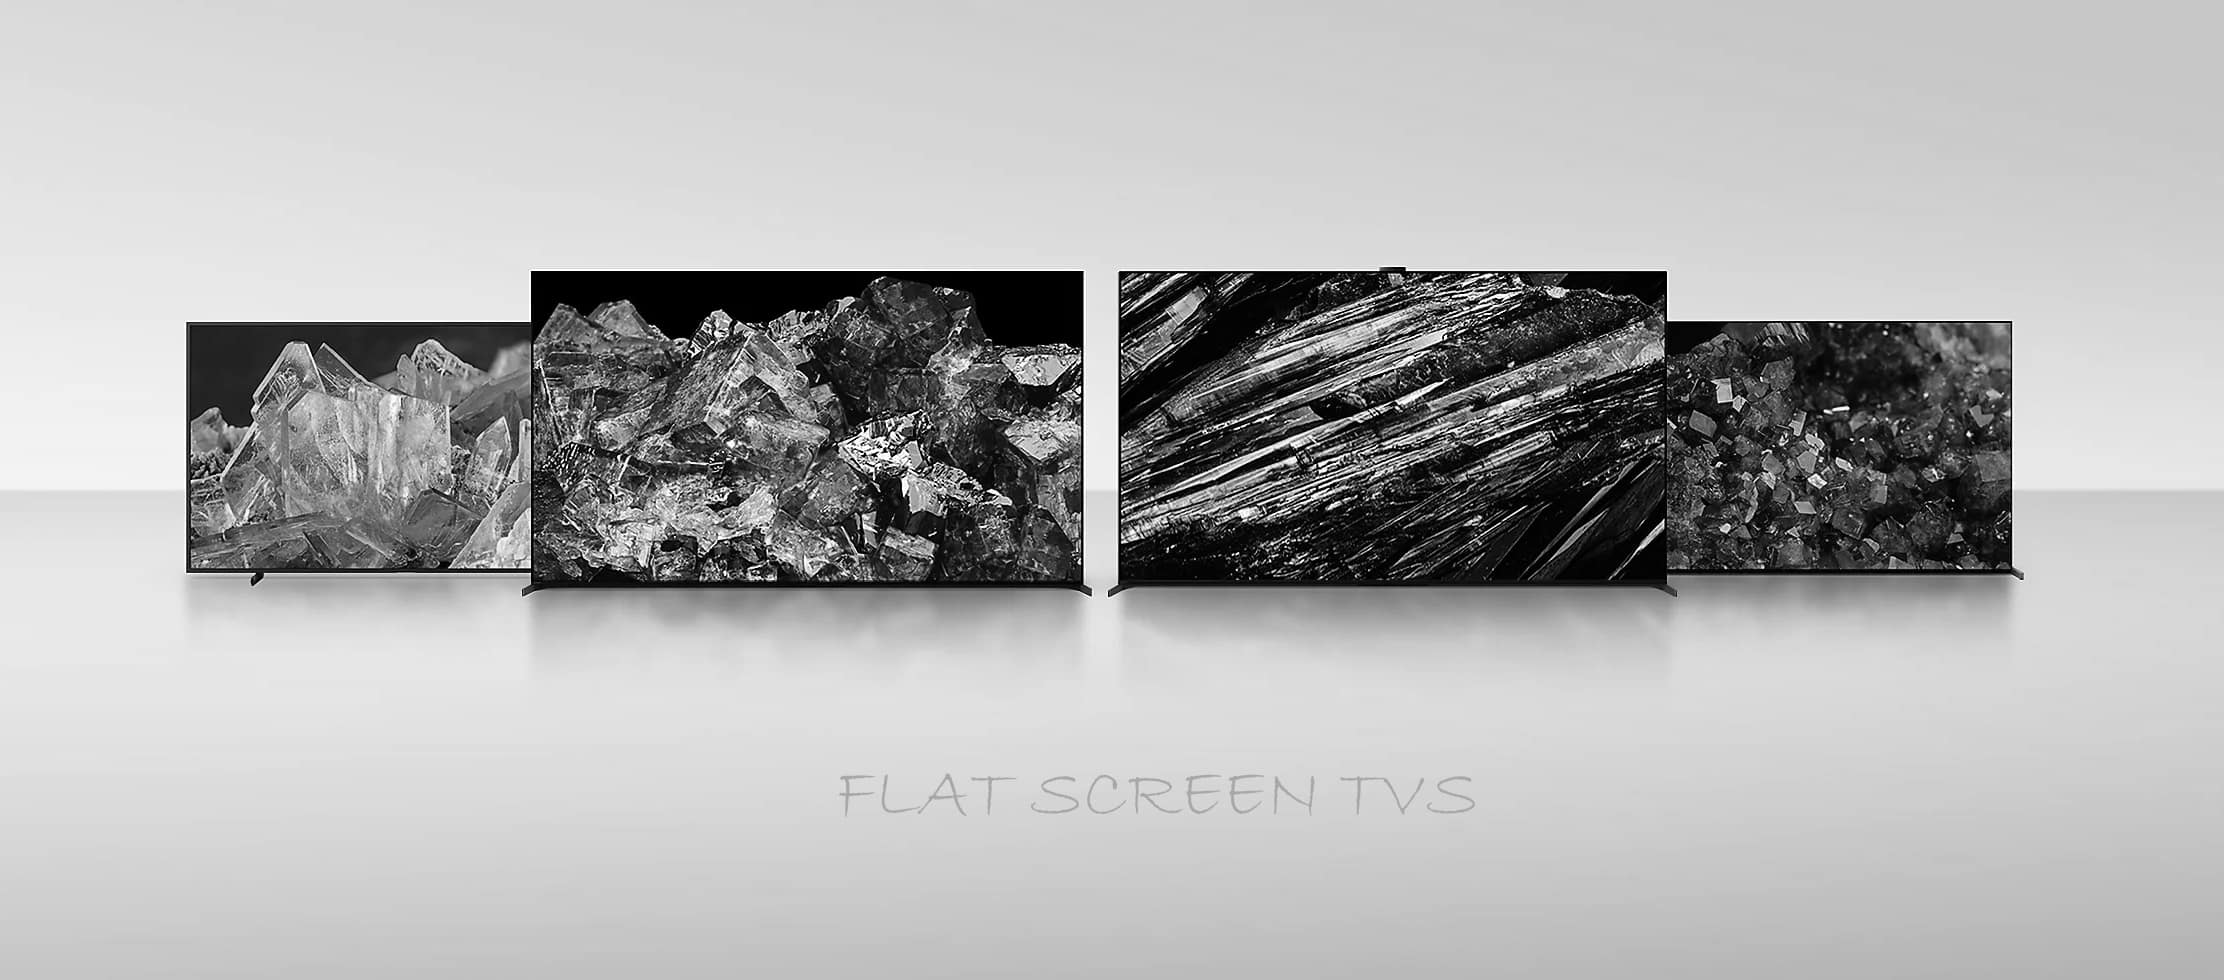 Flat screen Tvs